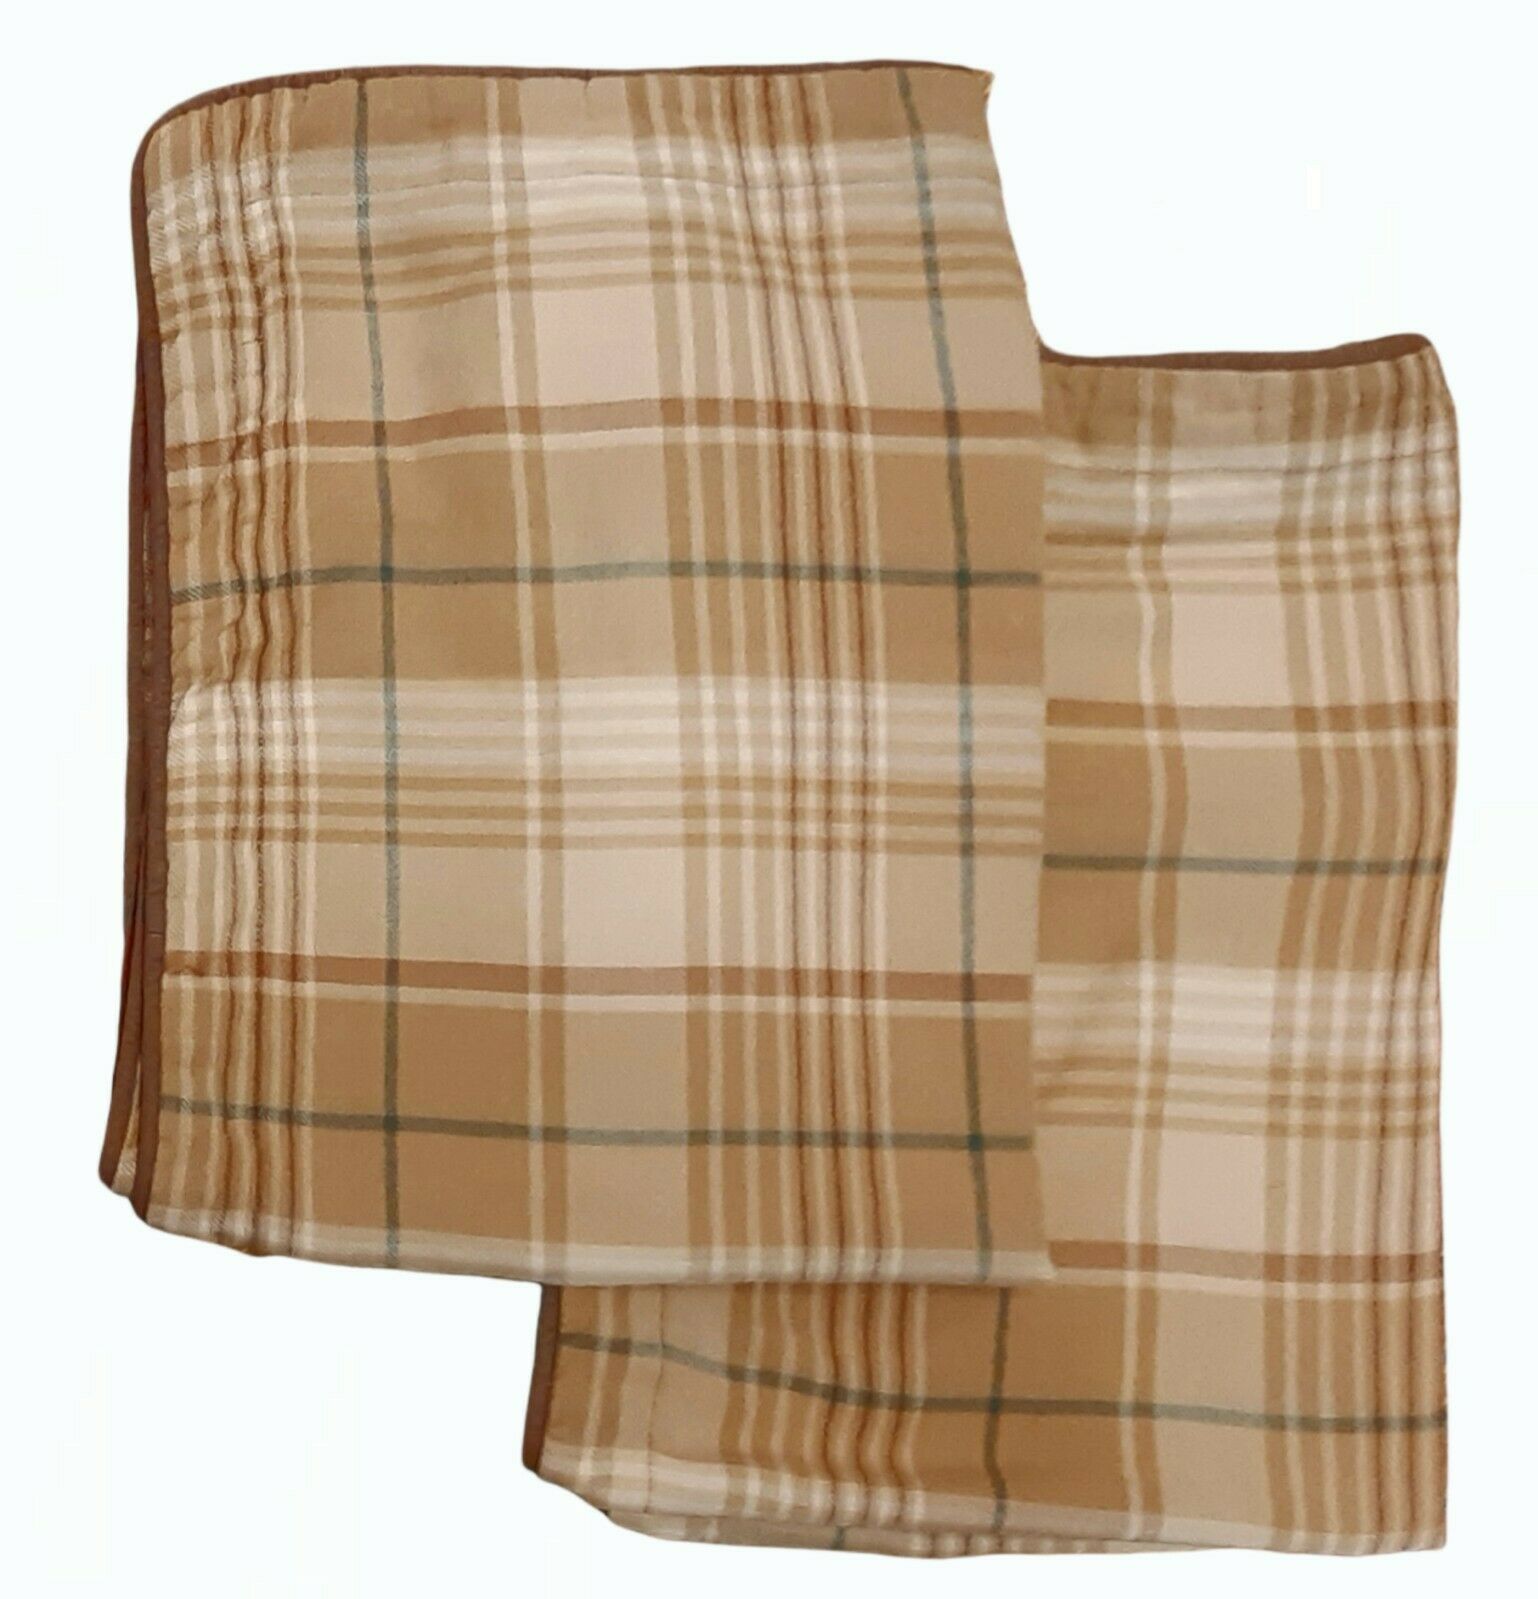 Ralph Lauren Chaps Pillow Shams (2) - Tan / Brown Plaid Checked - Standard